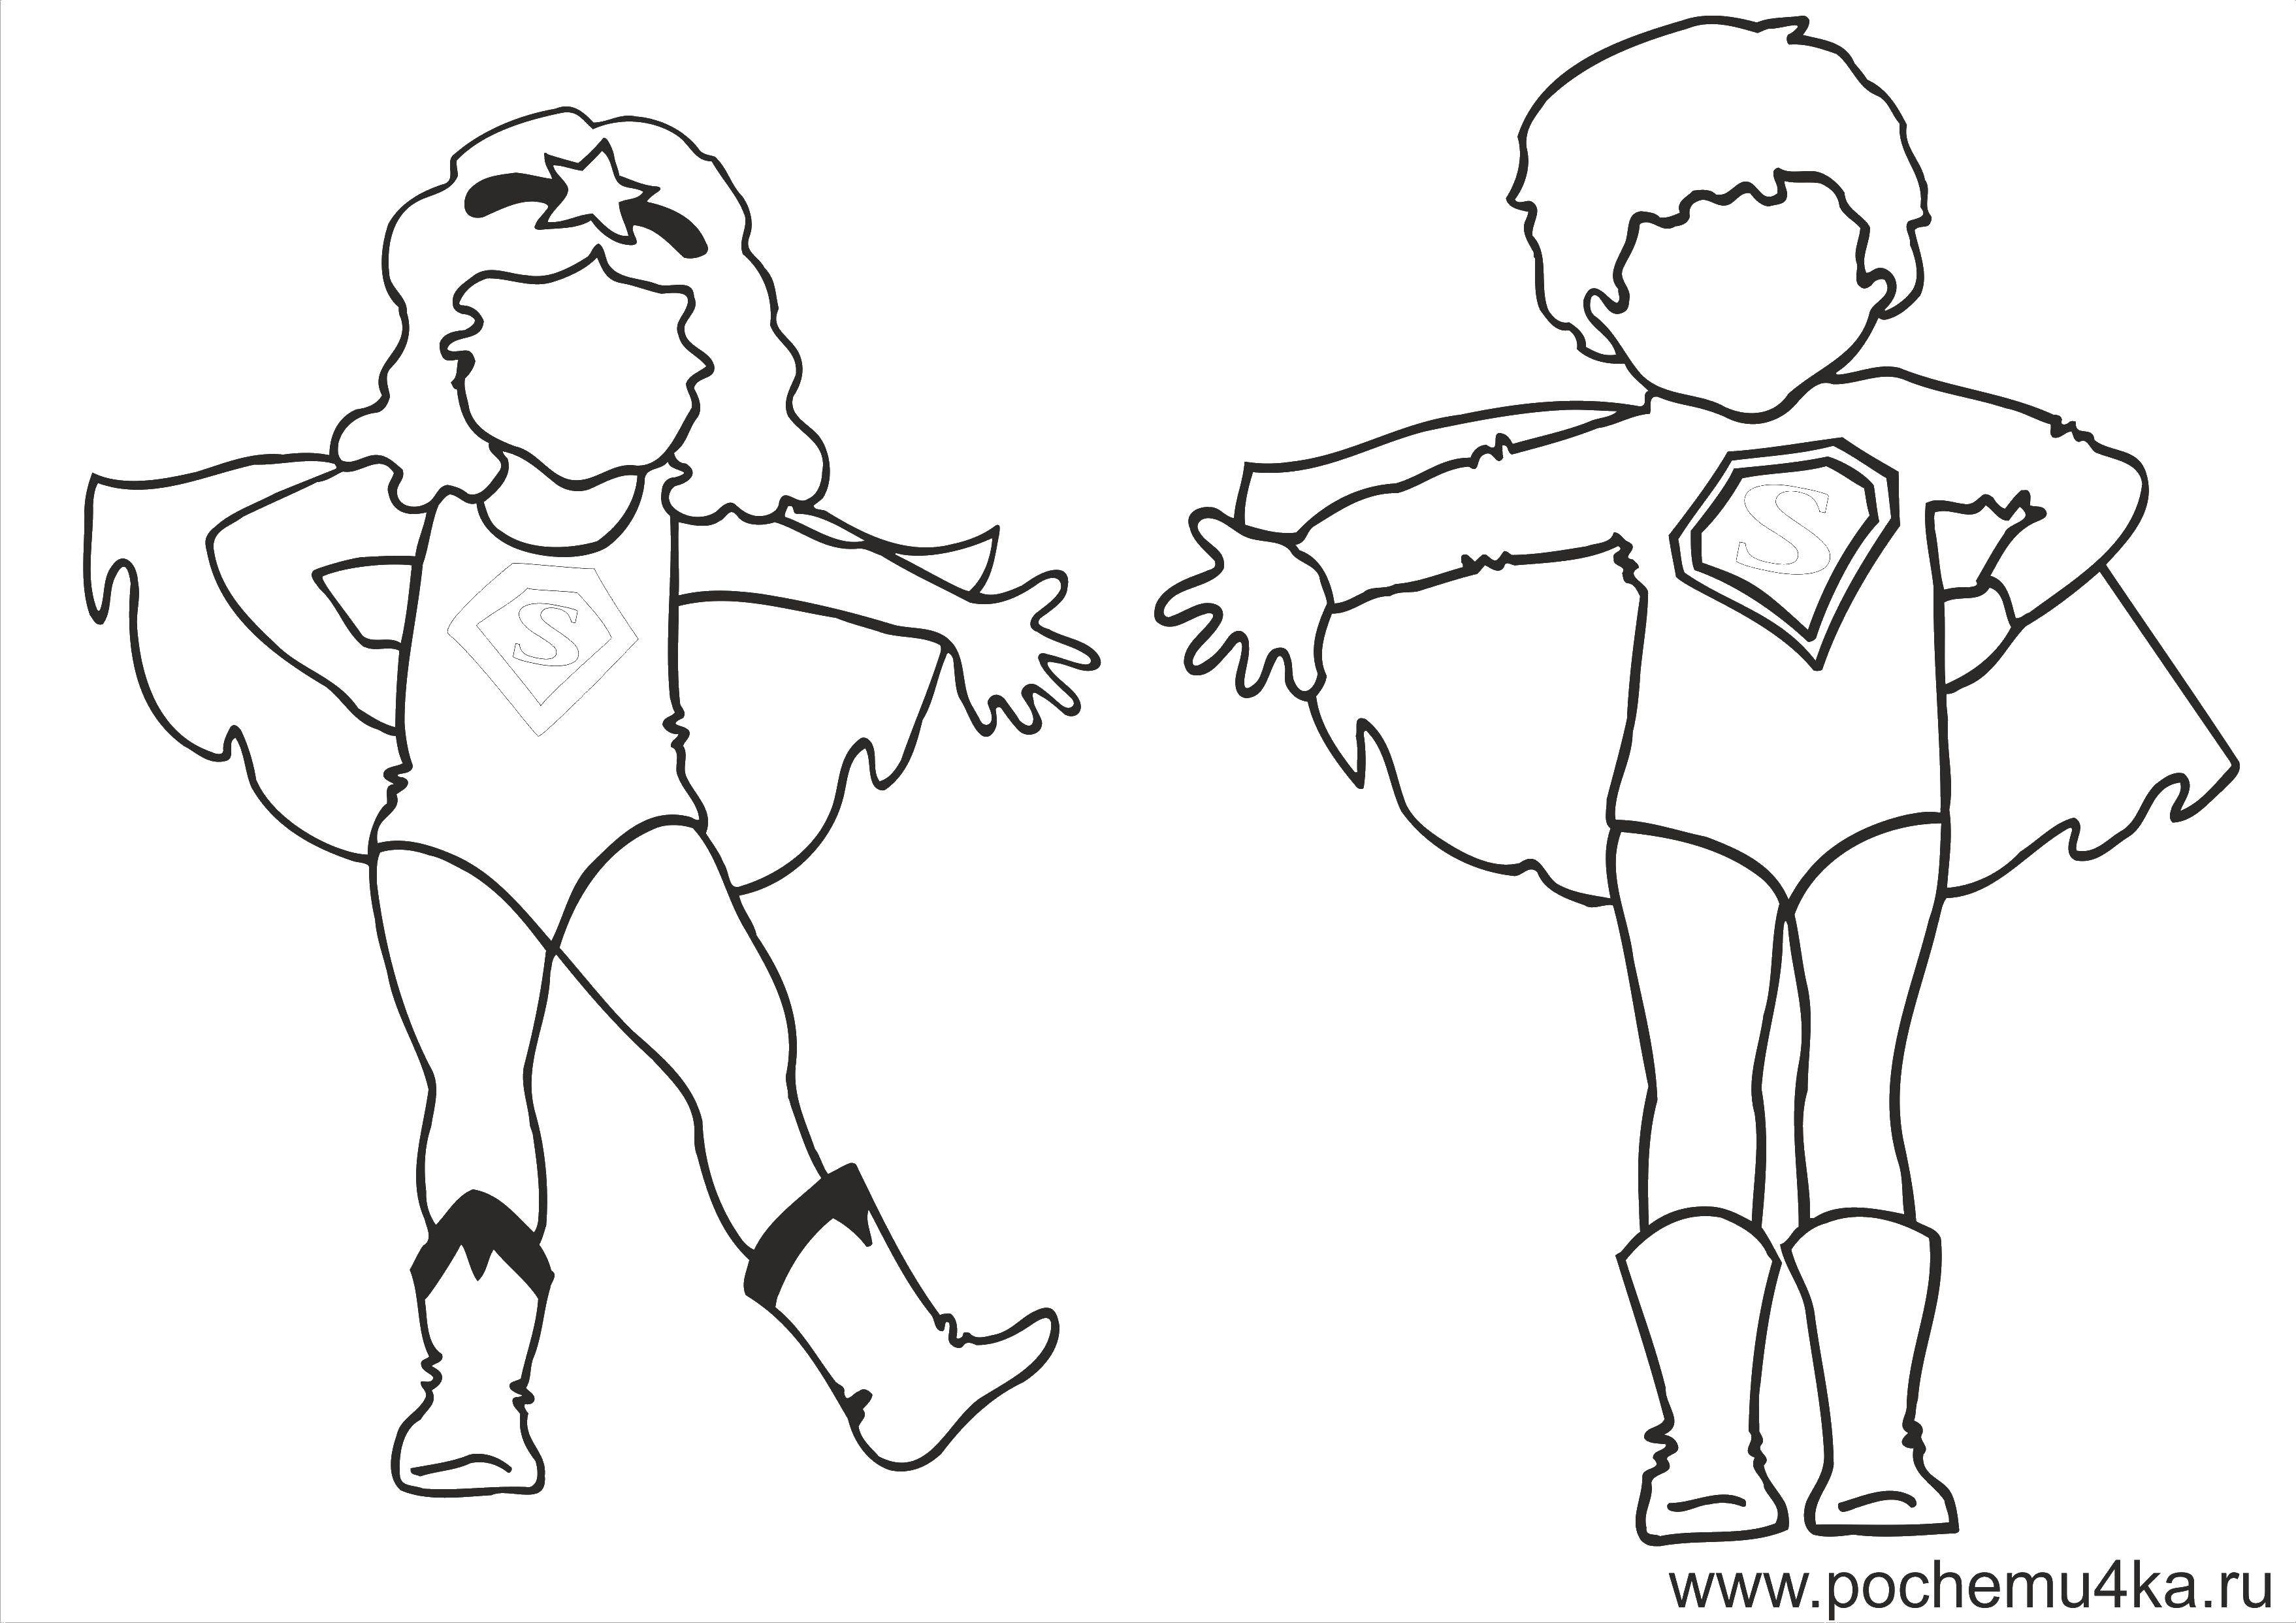 Coloring Baby costume supermen. Category children. Tags:  children, supermen.